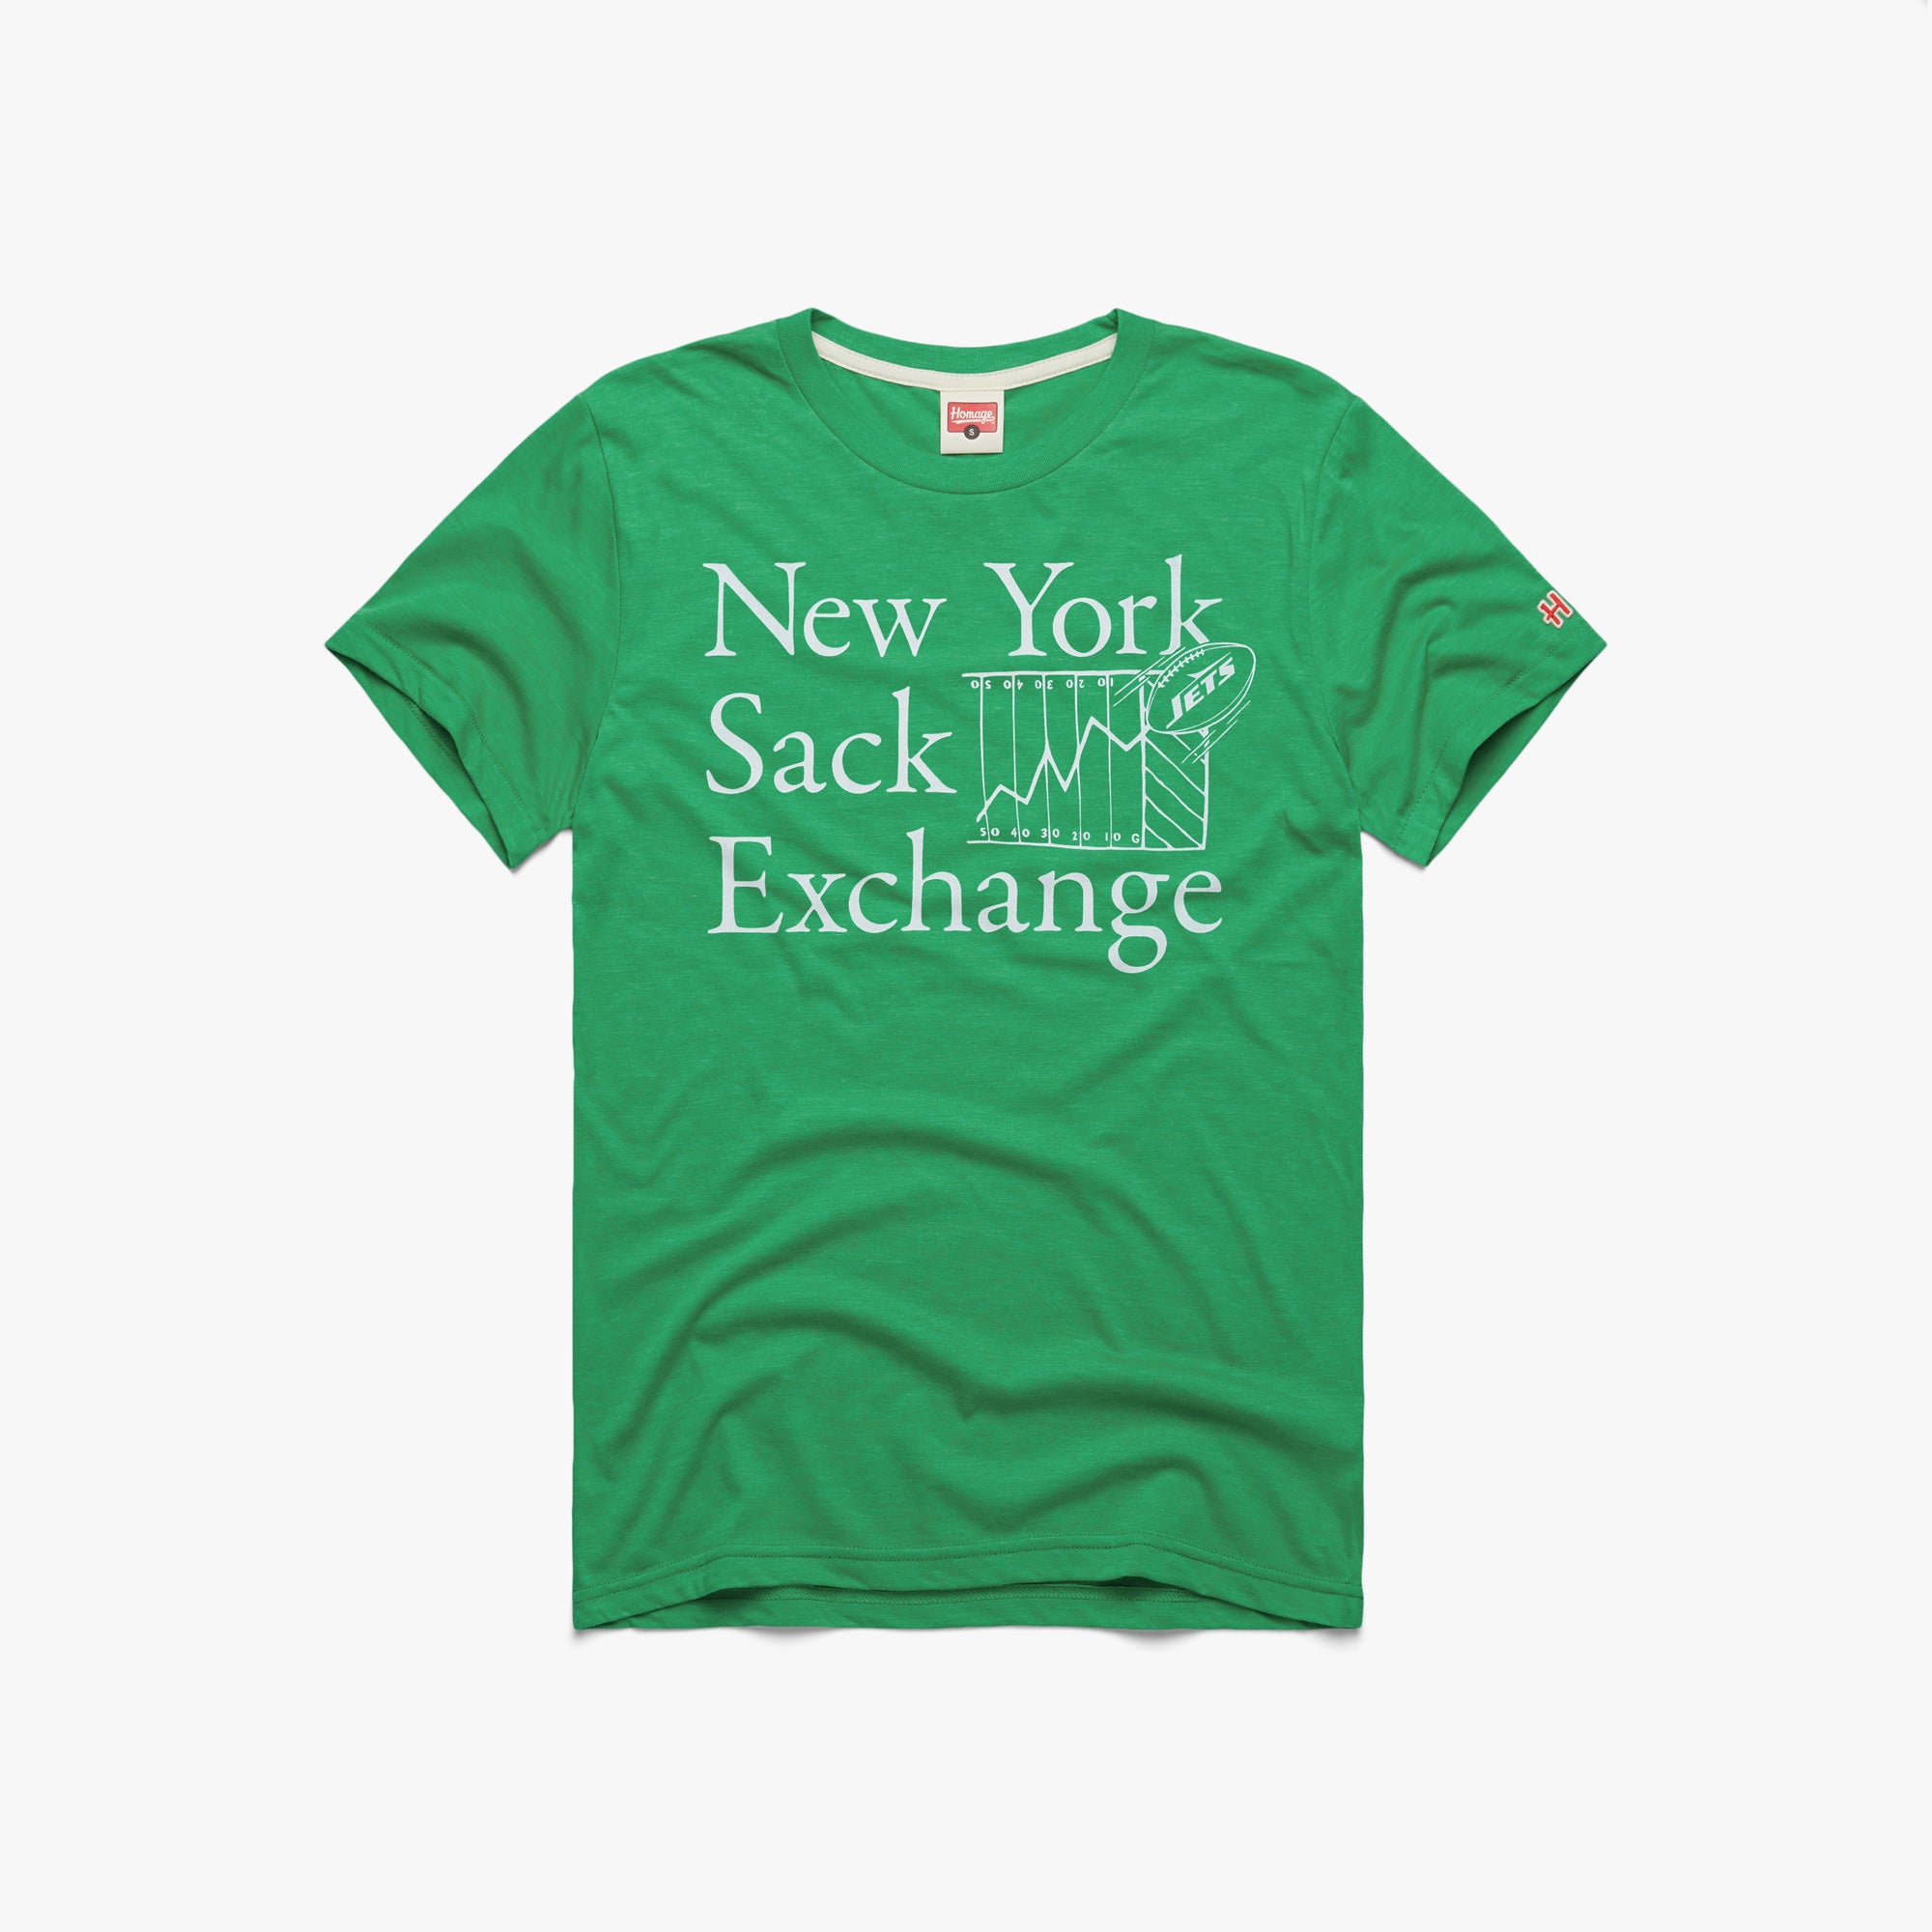 Jets debut throwback uniforms paying homage to 'New York Sack Exchange